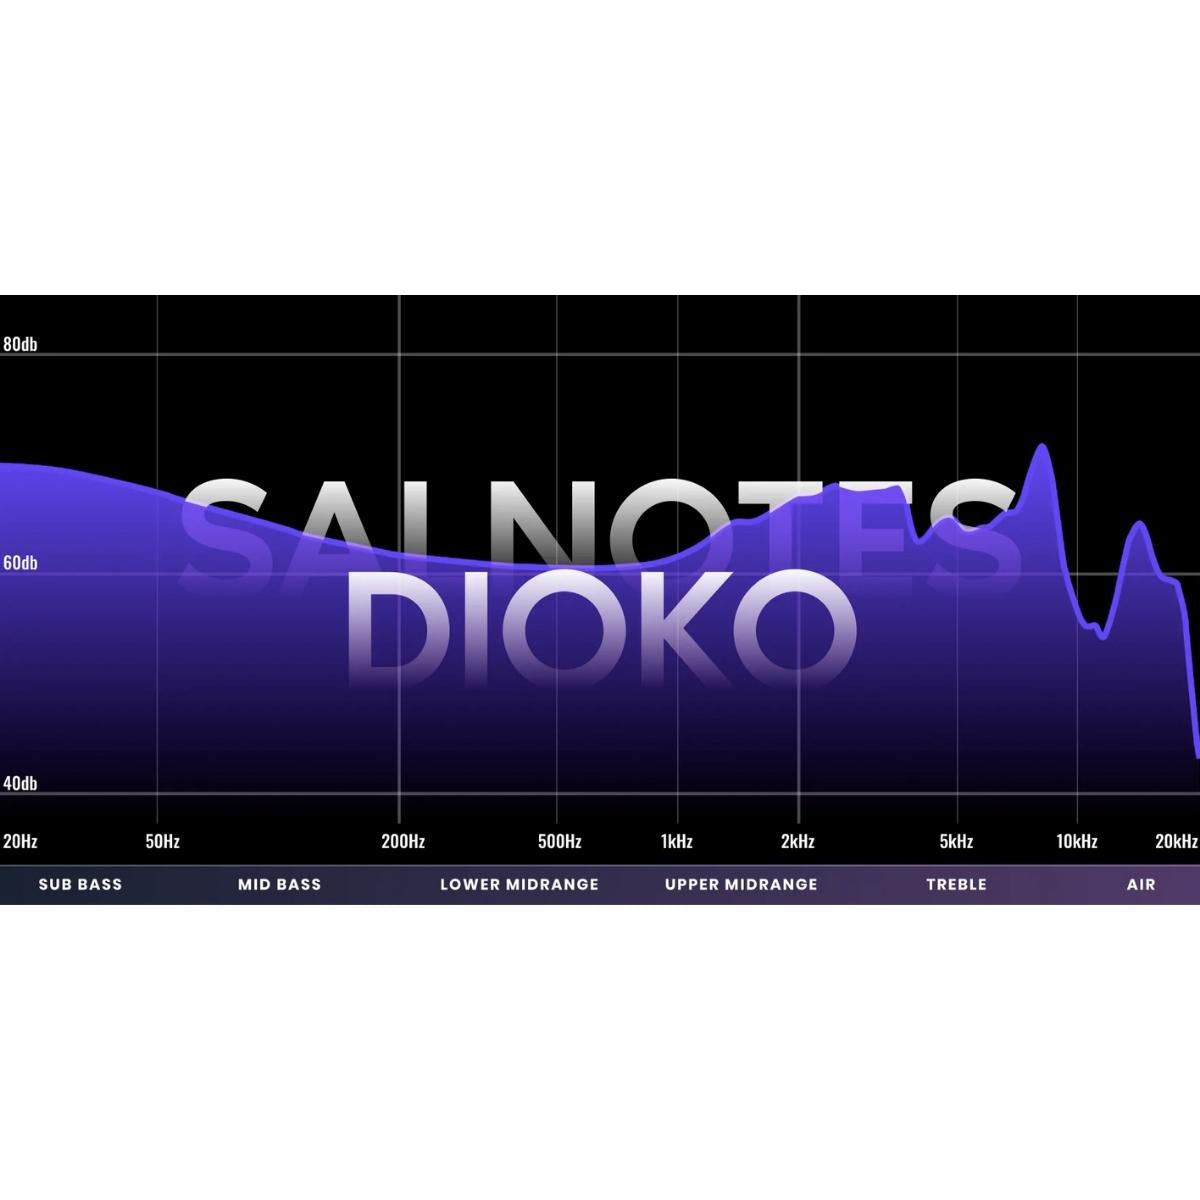 7HZ Crinacle: Salnotes Dioko Planar Driver IEM